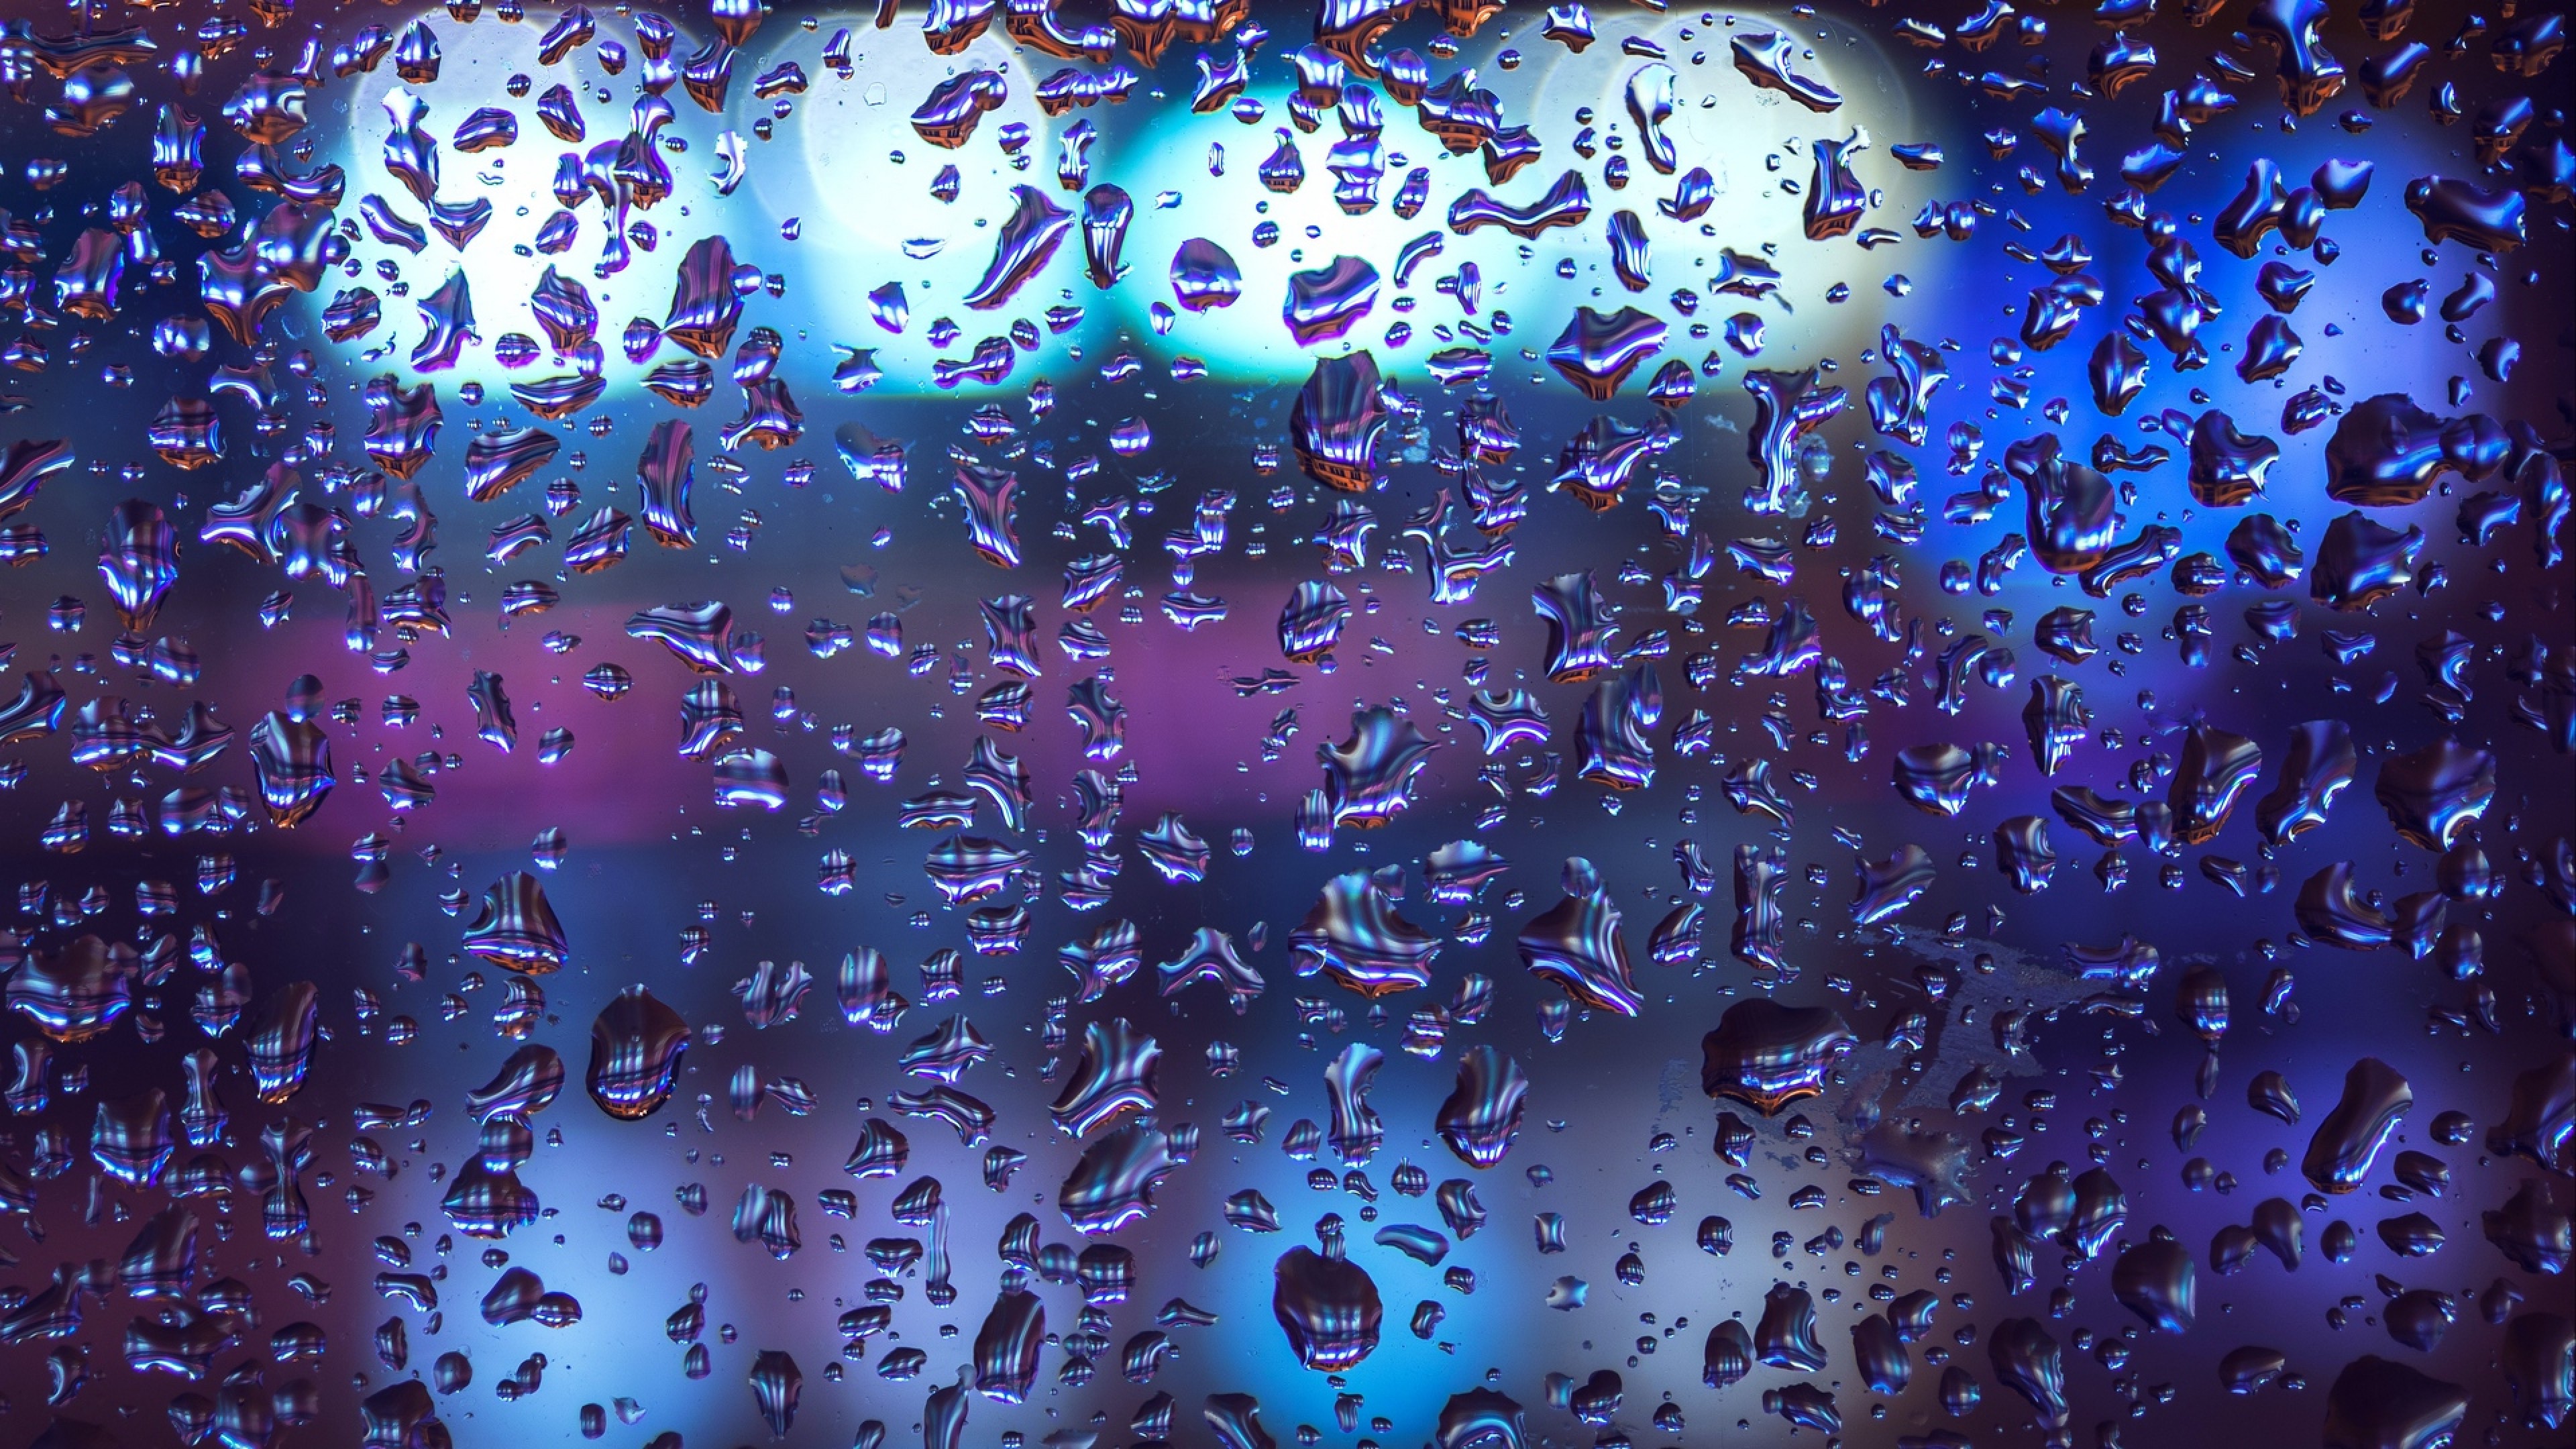 Rain drops macro image HD Wallpaper 4K Ultra HD - HD Wallpaper - Wallpapers .net